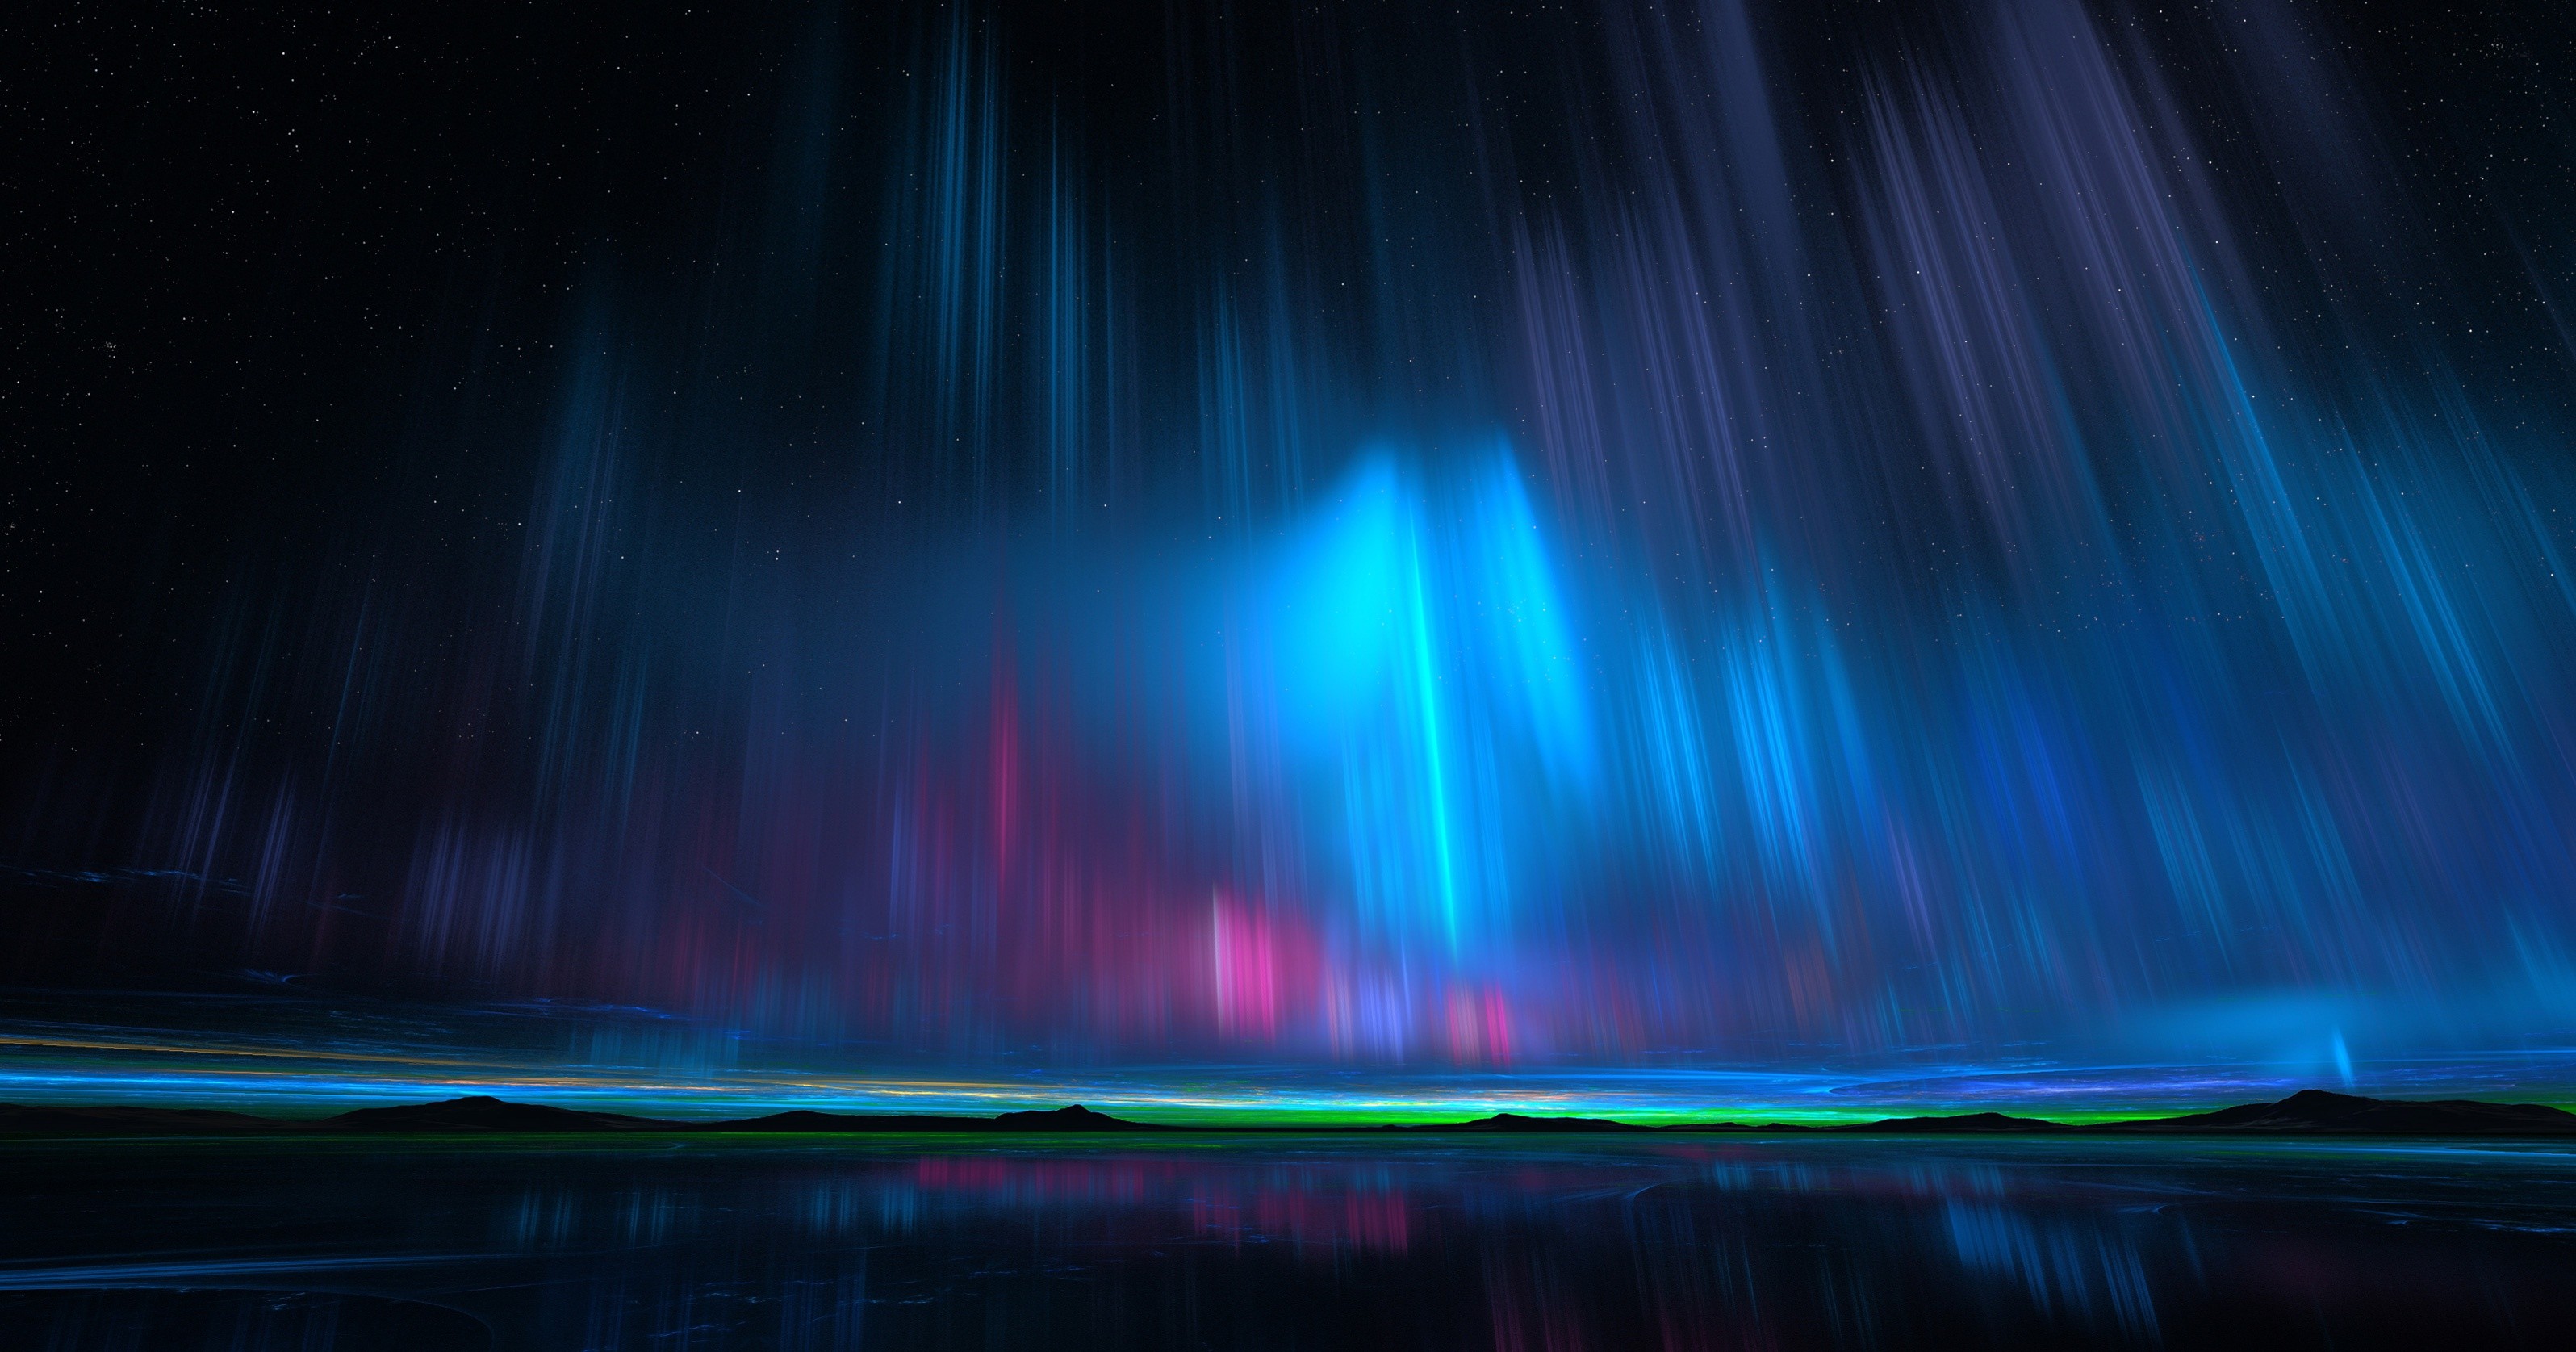 3192x1675 Aurora Borealis HD Wallpaper | Background Image |  | ID:857442 -  Wallpaper Abyss